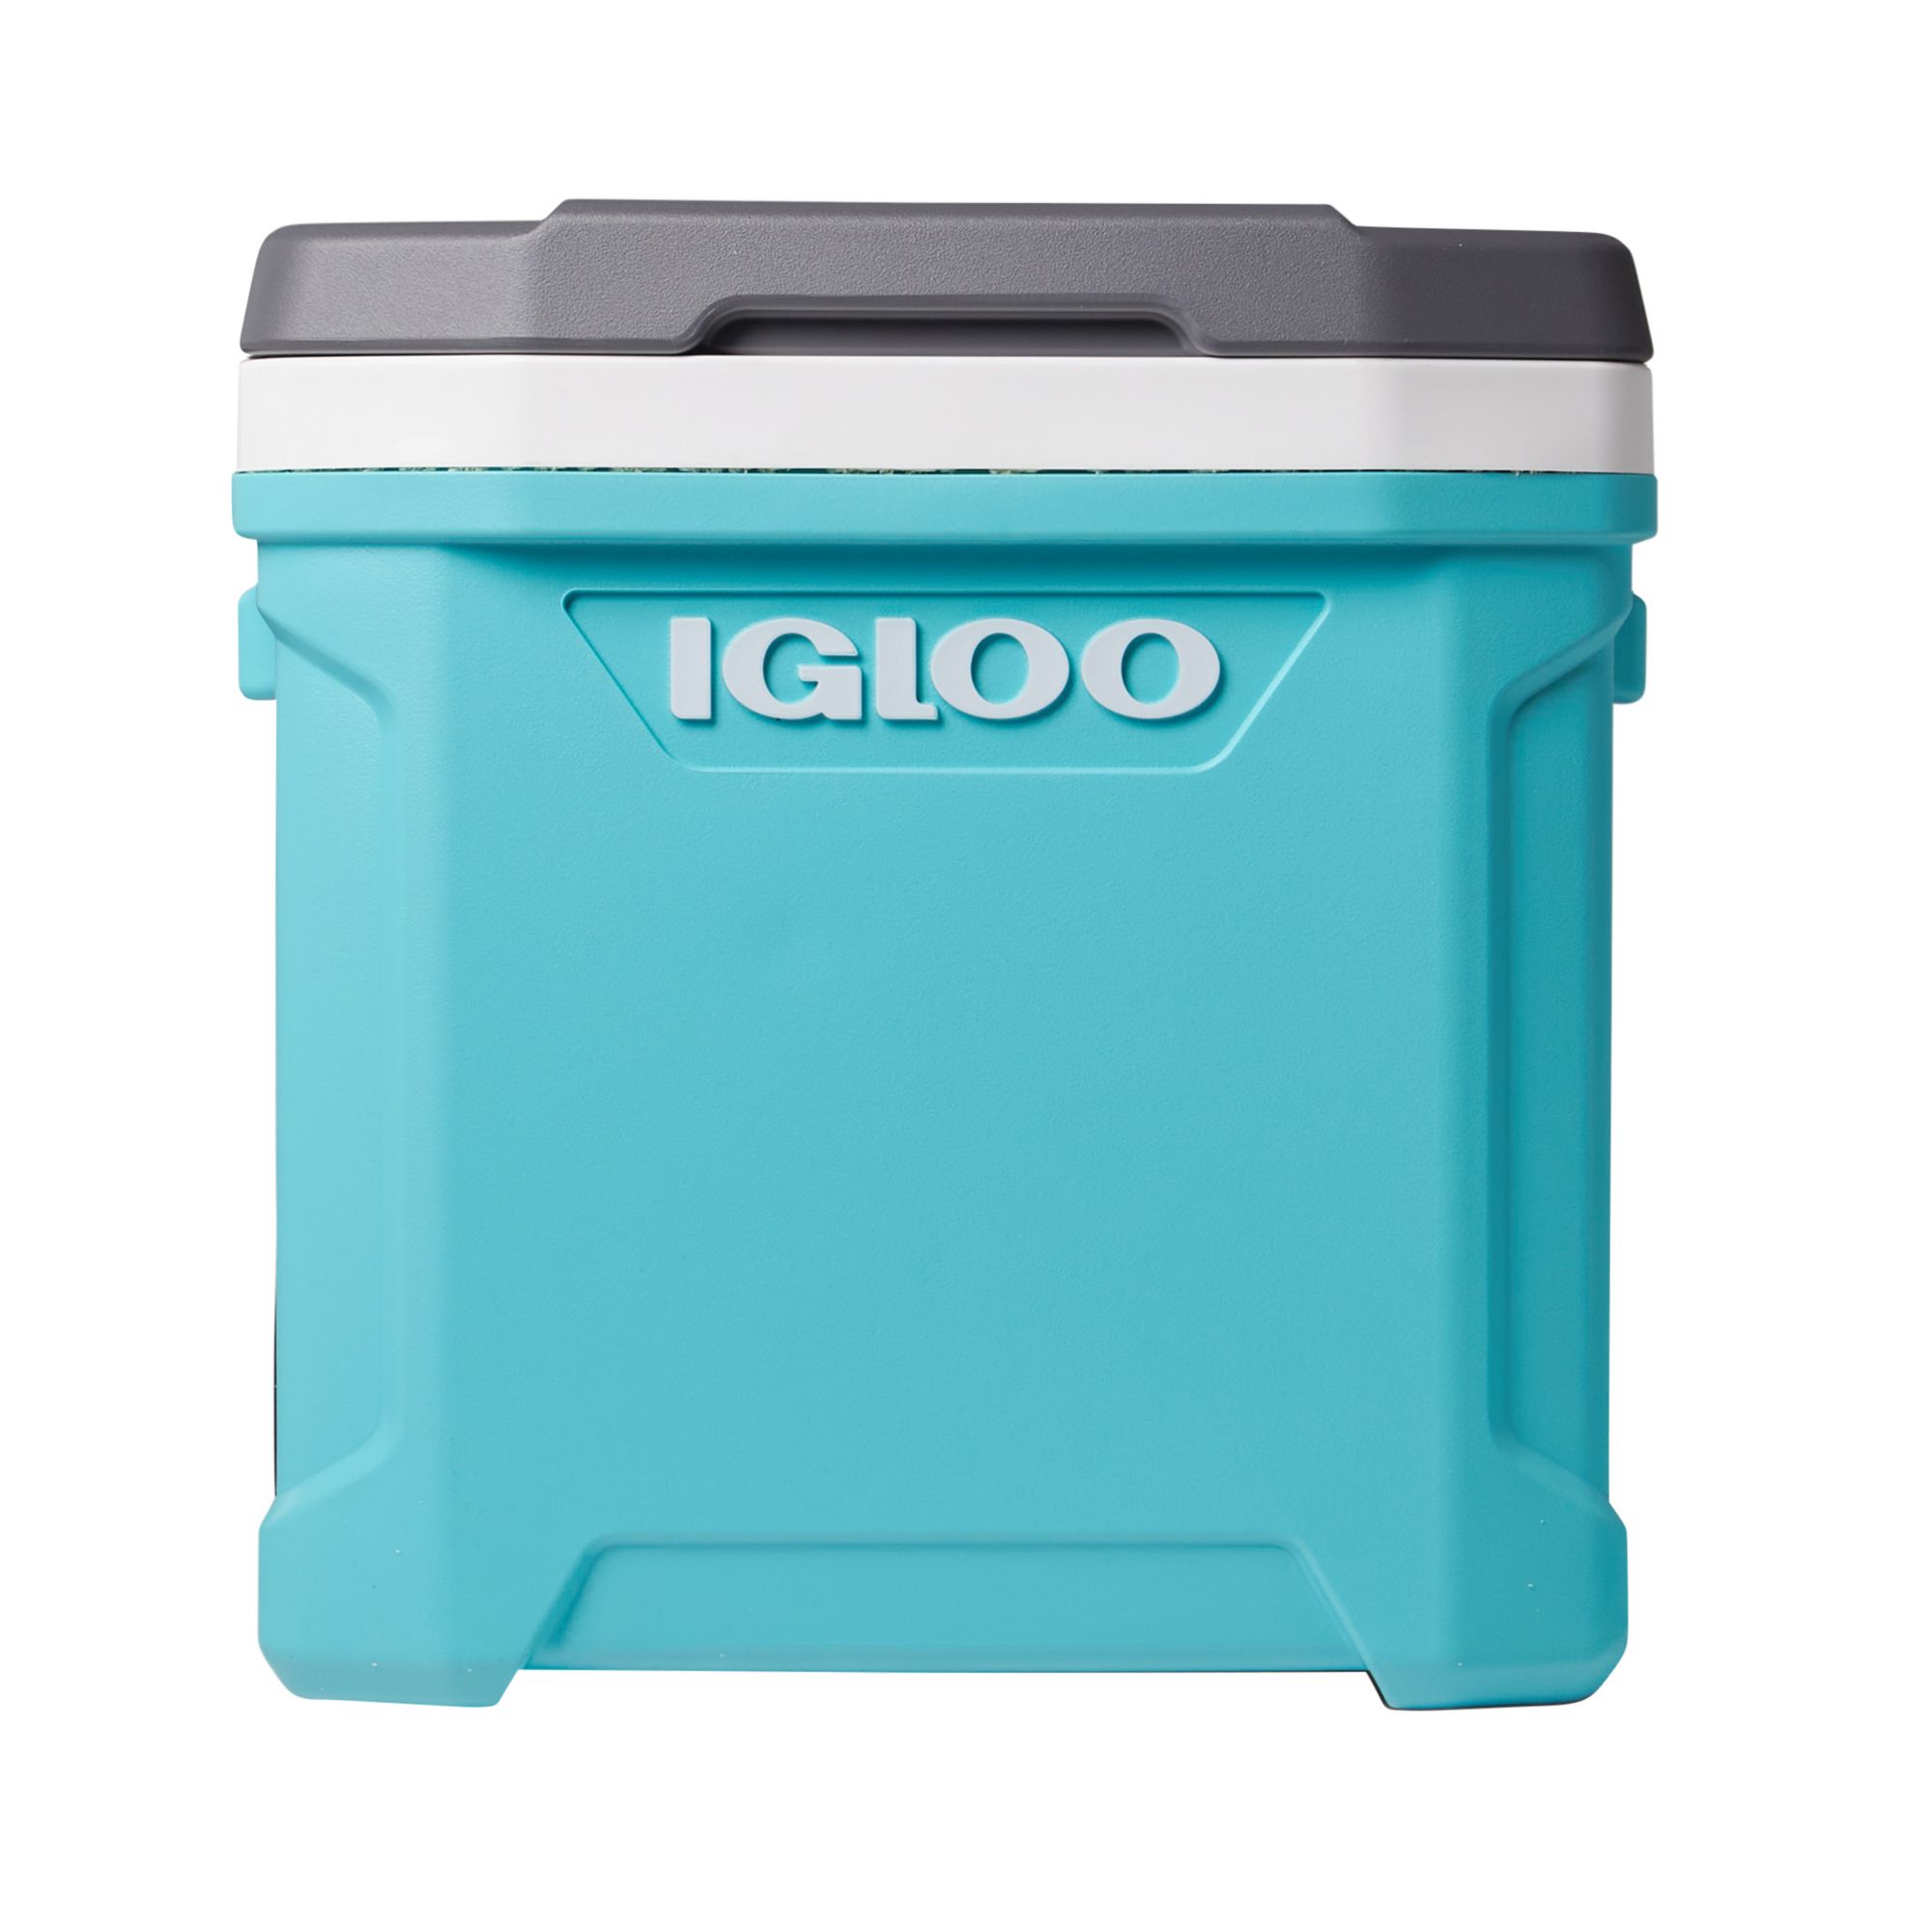 Igloo Marine Ultra Cooler (White, 54-Quart) & Maxcold Ice Freezer